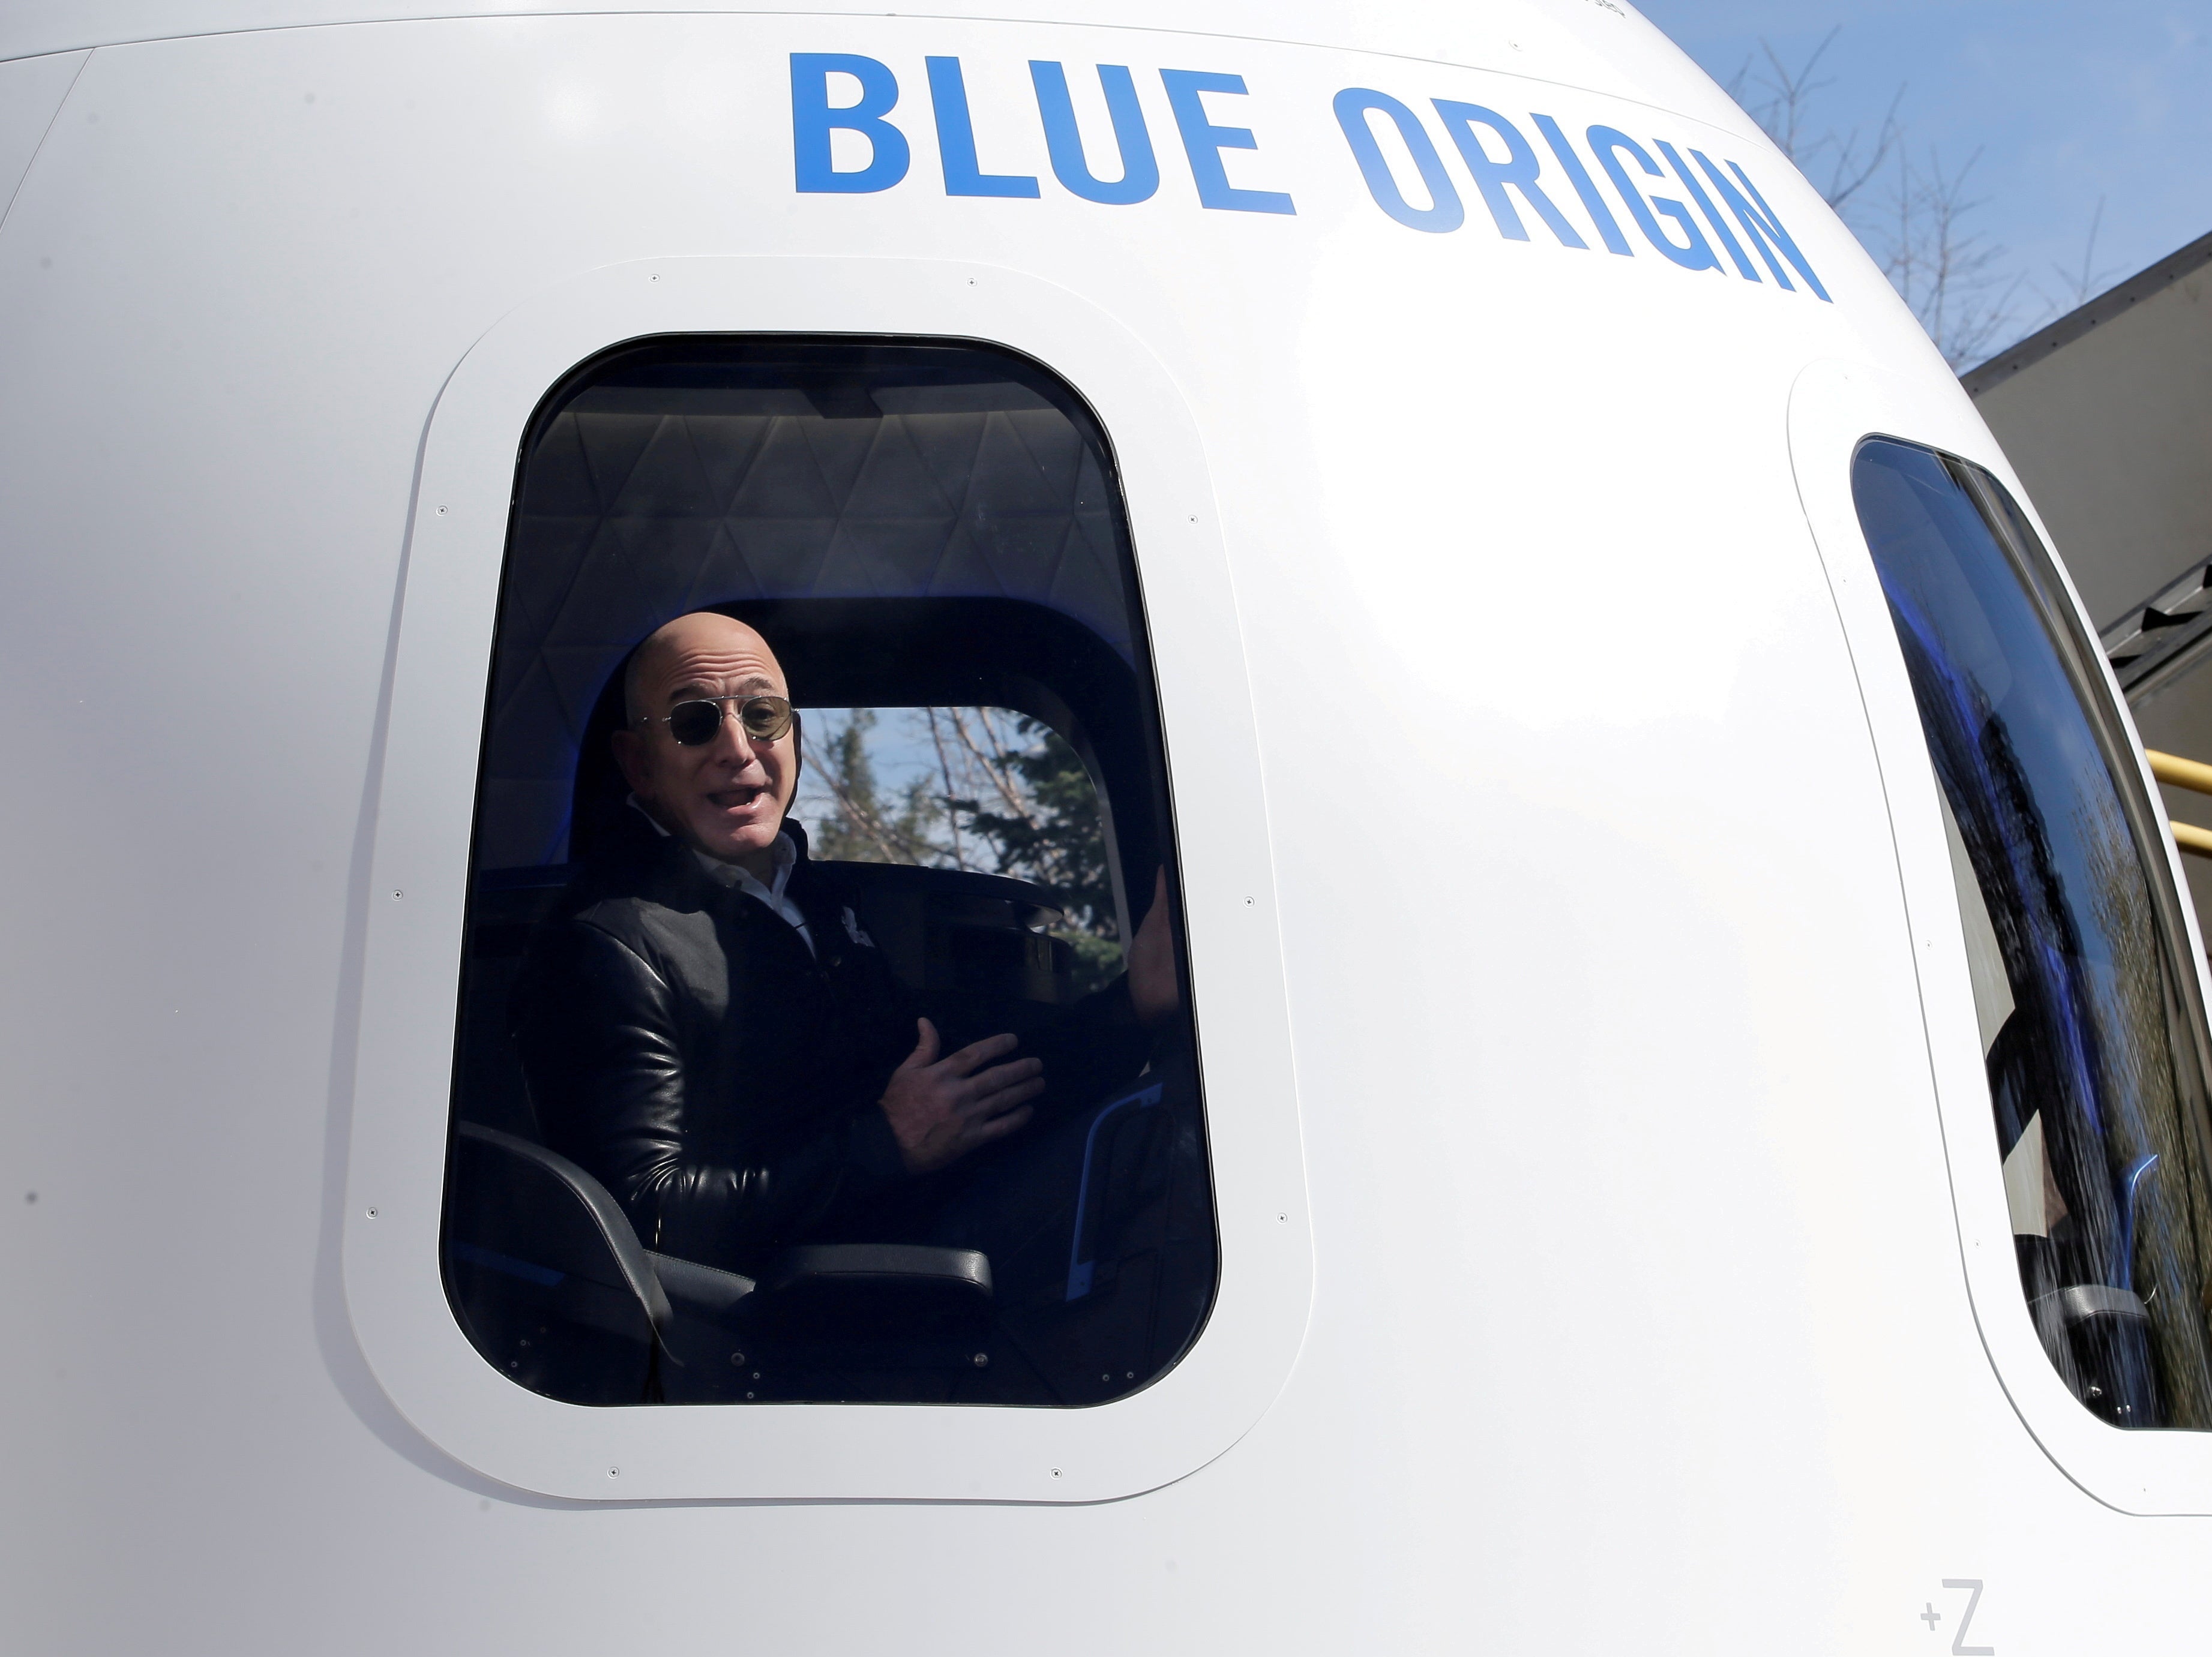 Jeff Bezos addresses the media from inside Blue Origin